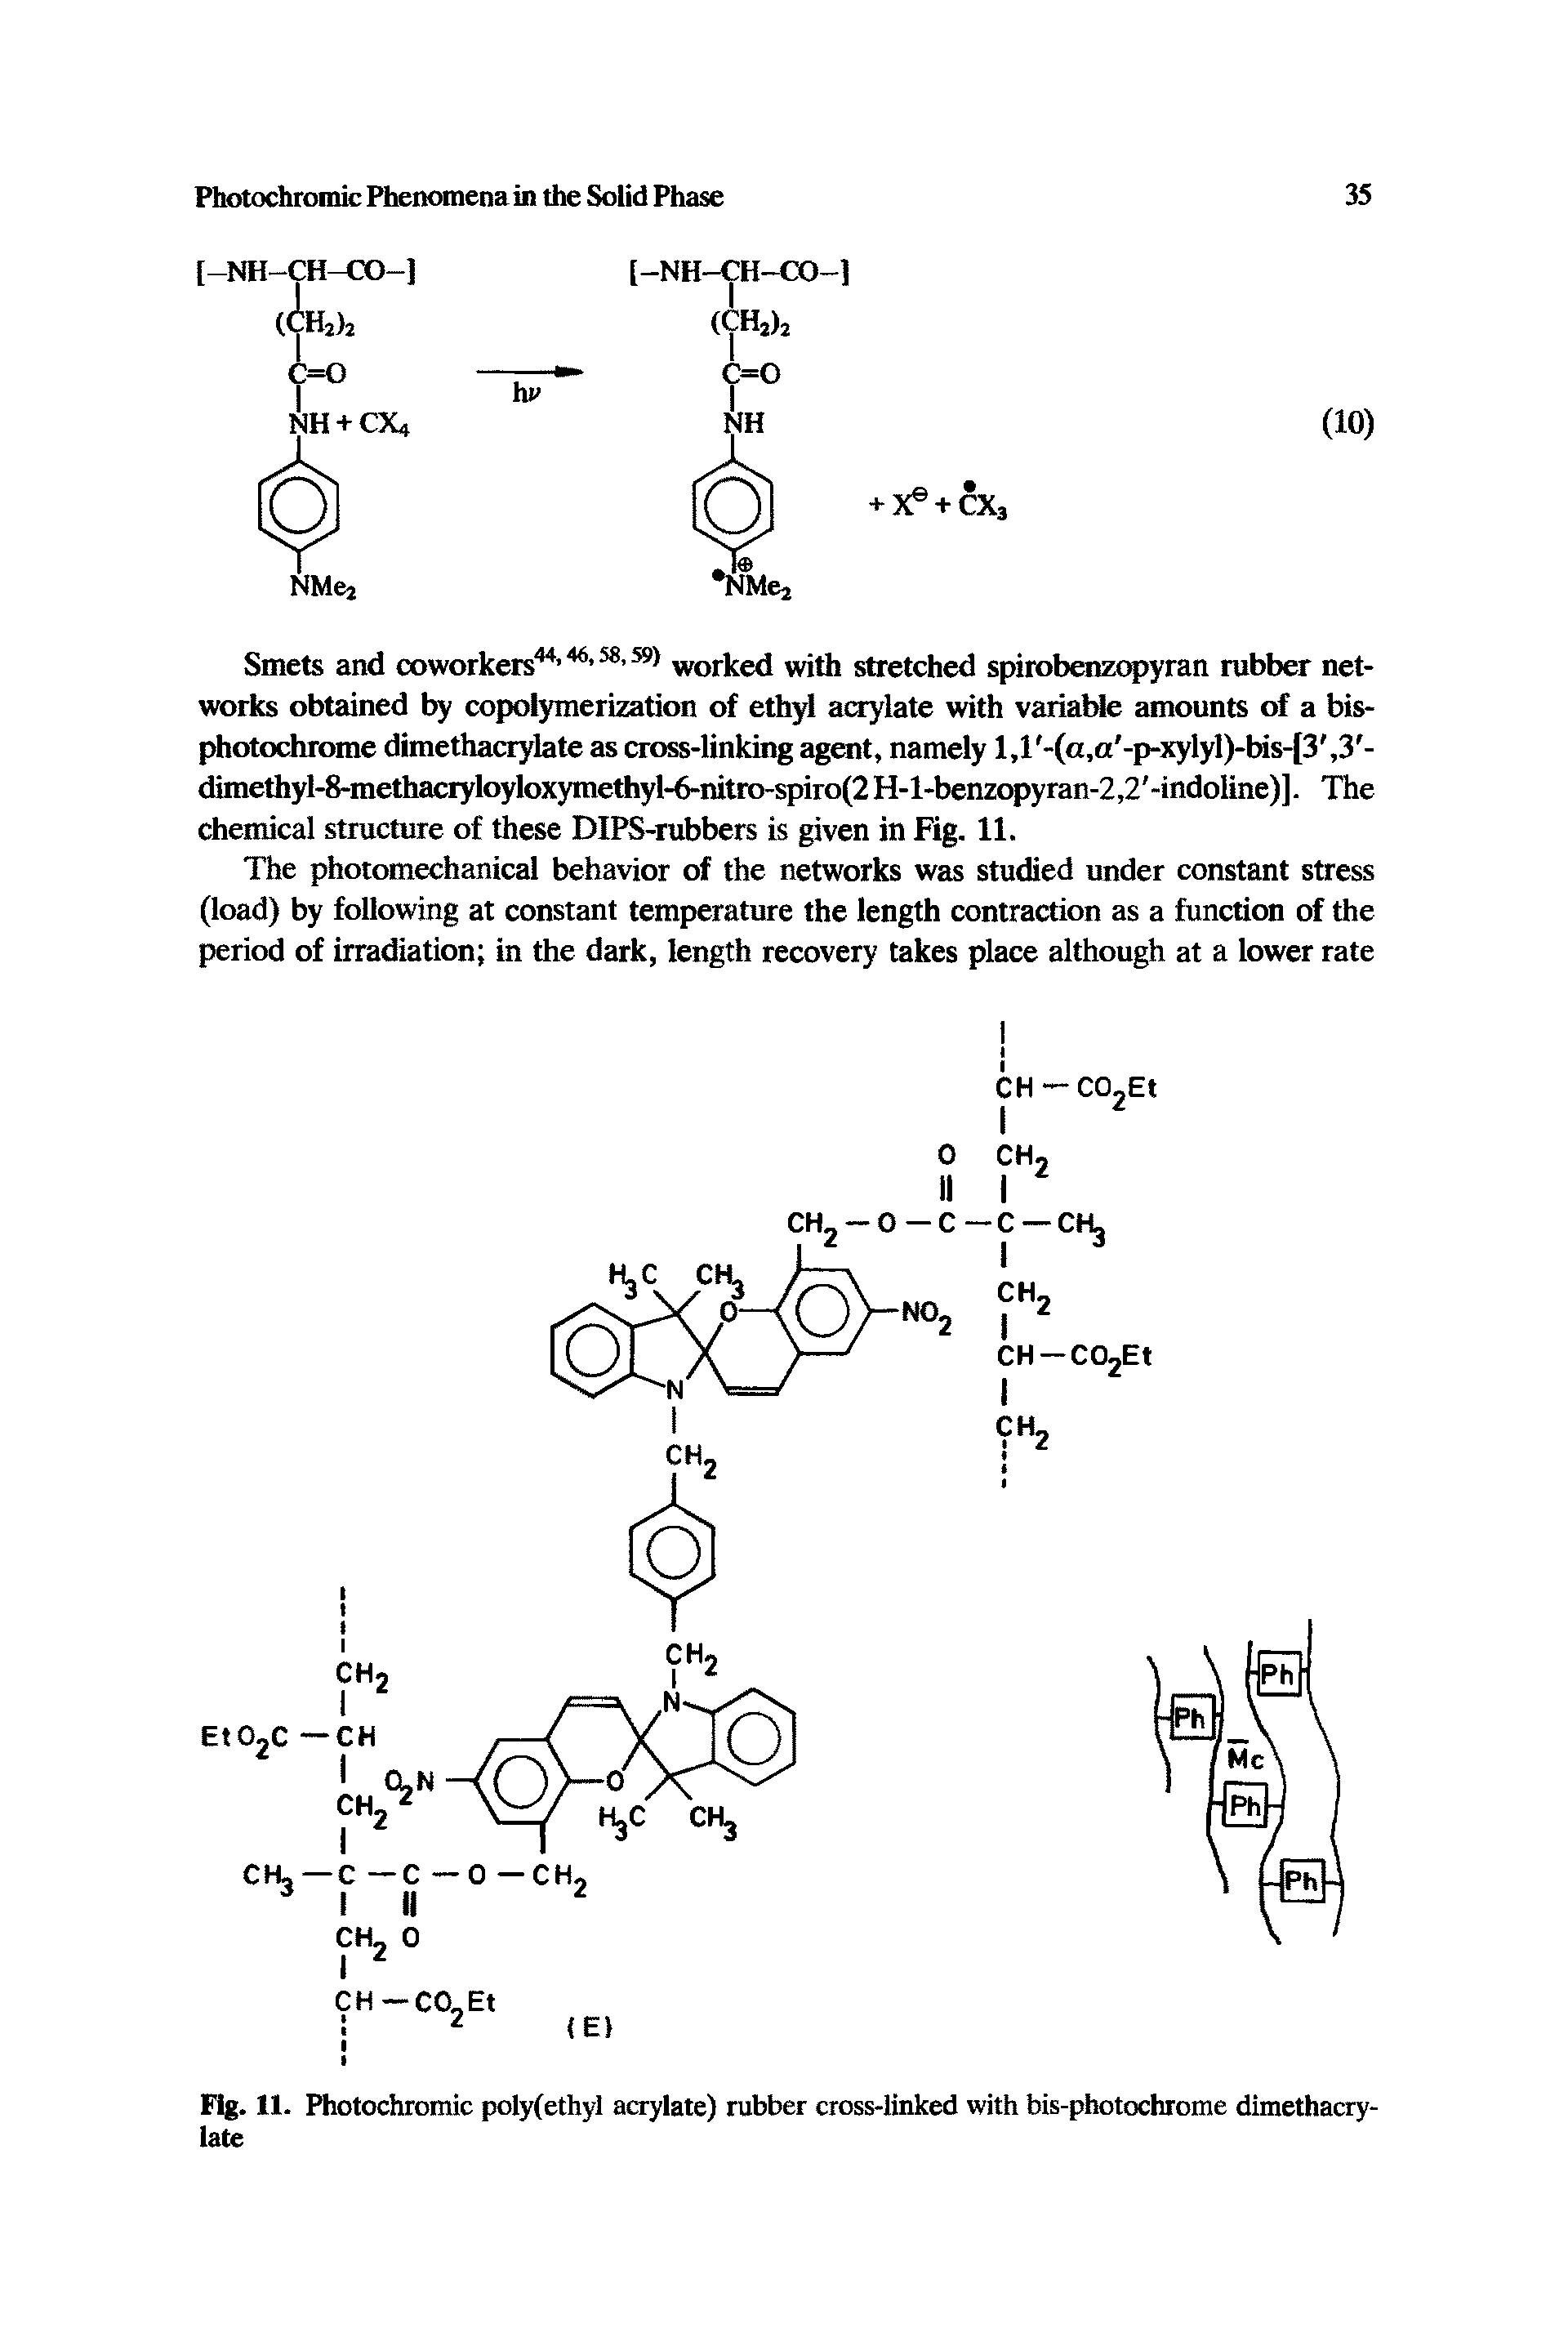 Fig. 11. Photochromic polyfethyl acrylate) rubber cross-linked with bis-photochrome dimethacrylate...